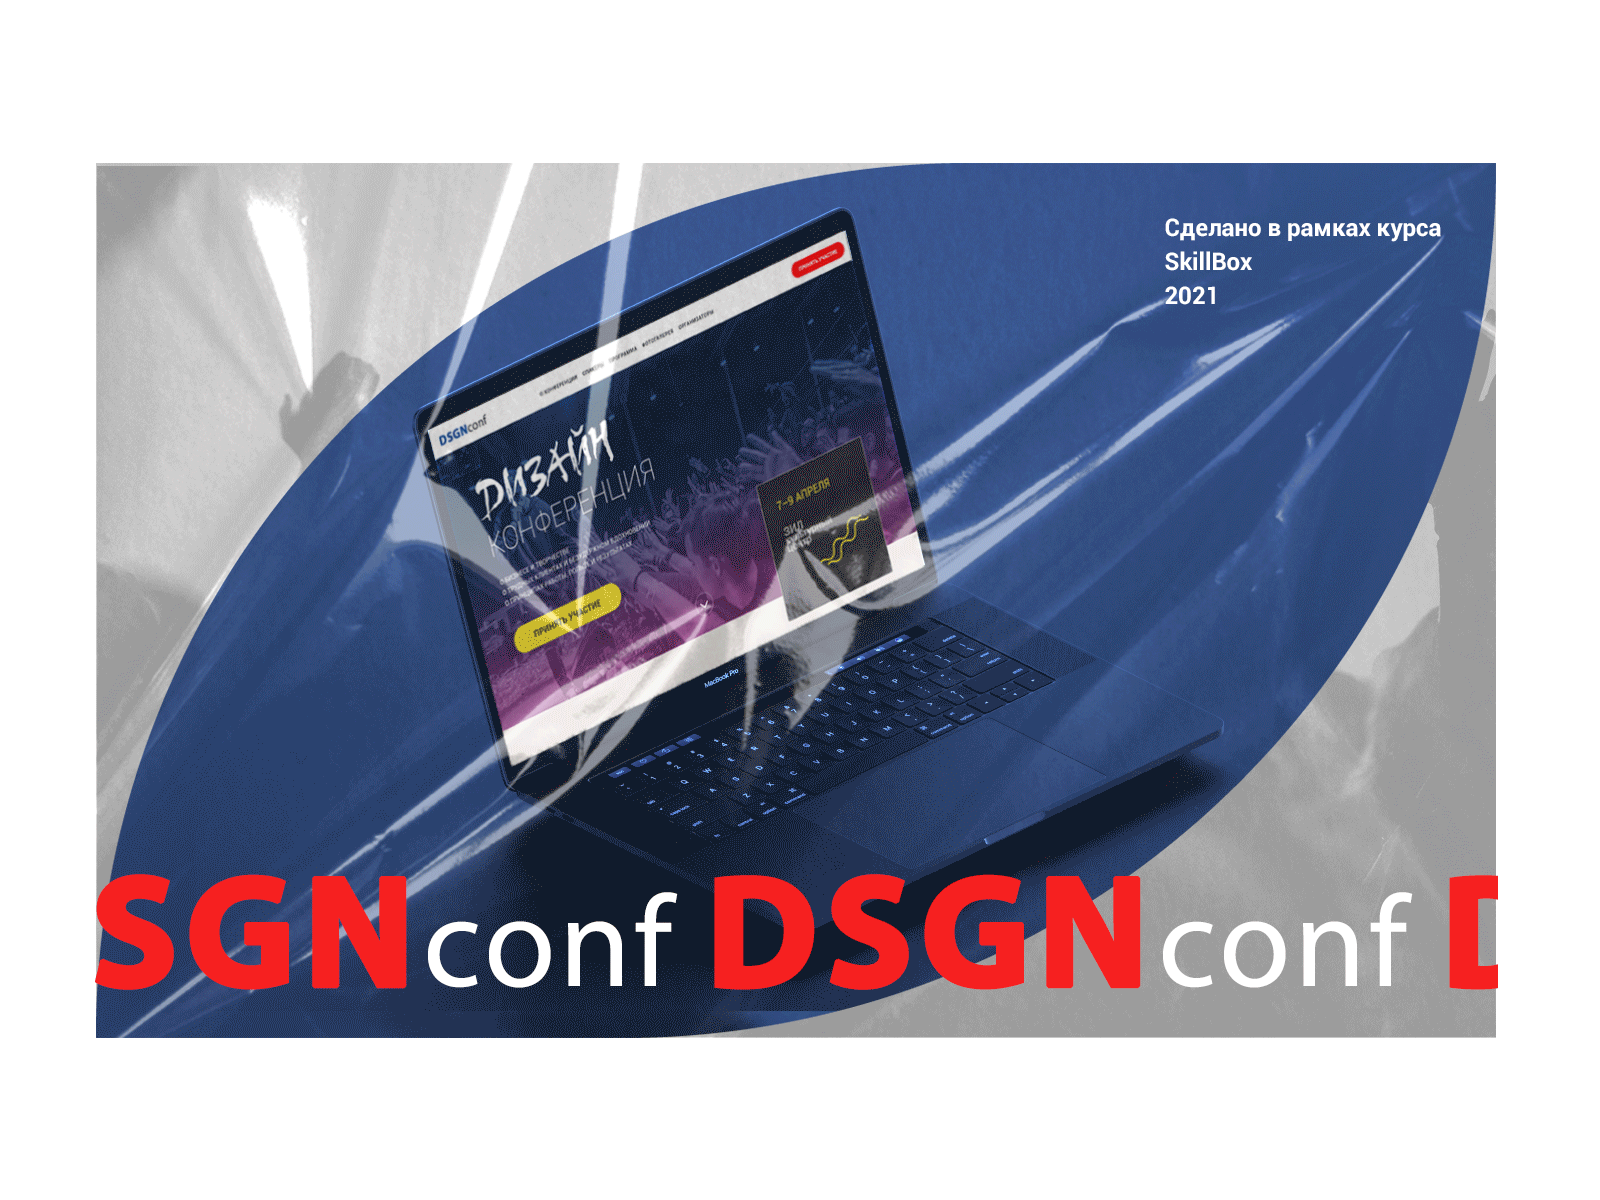 Website concept about conference design. 2021 concept conference design site skillbox training project web design website